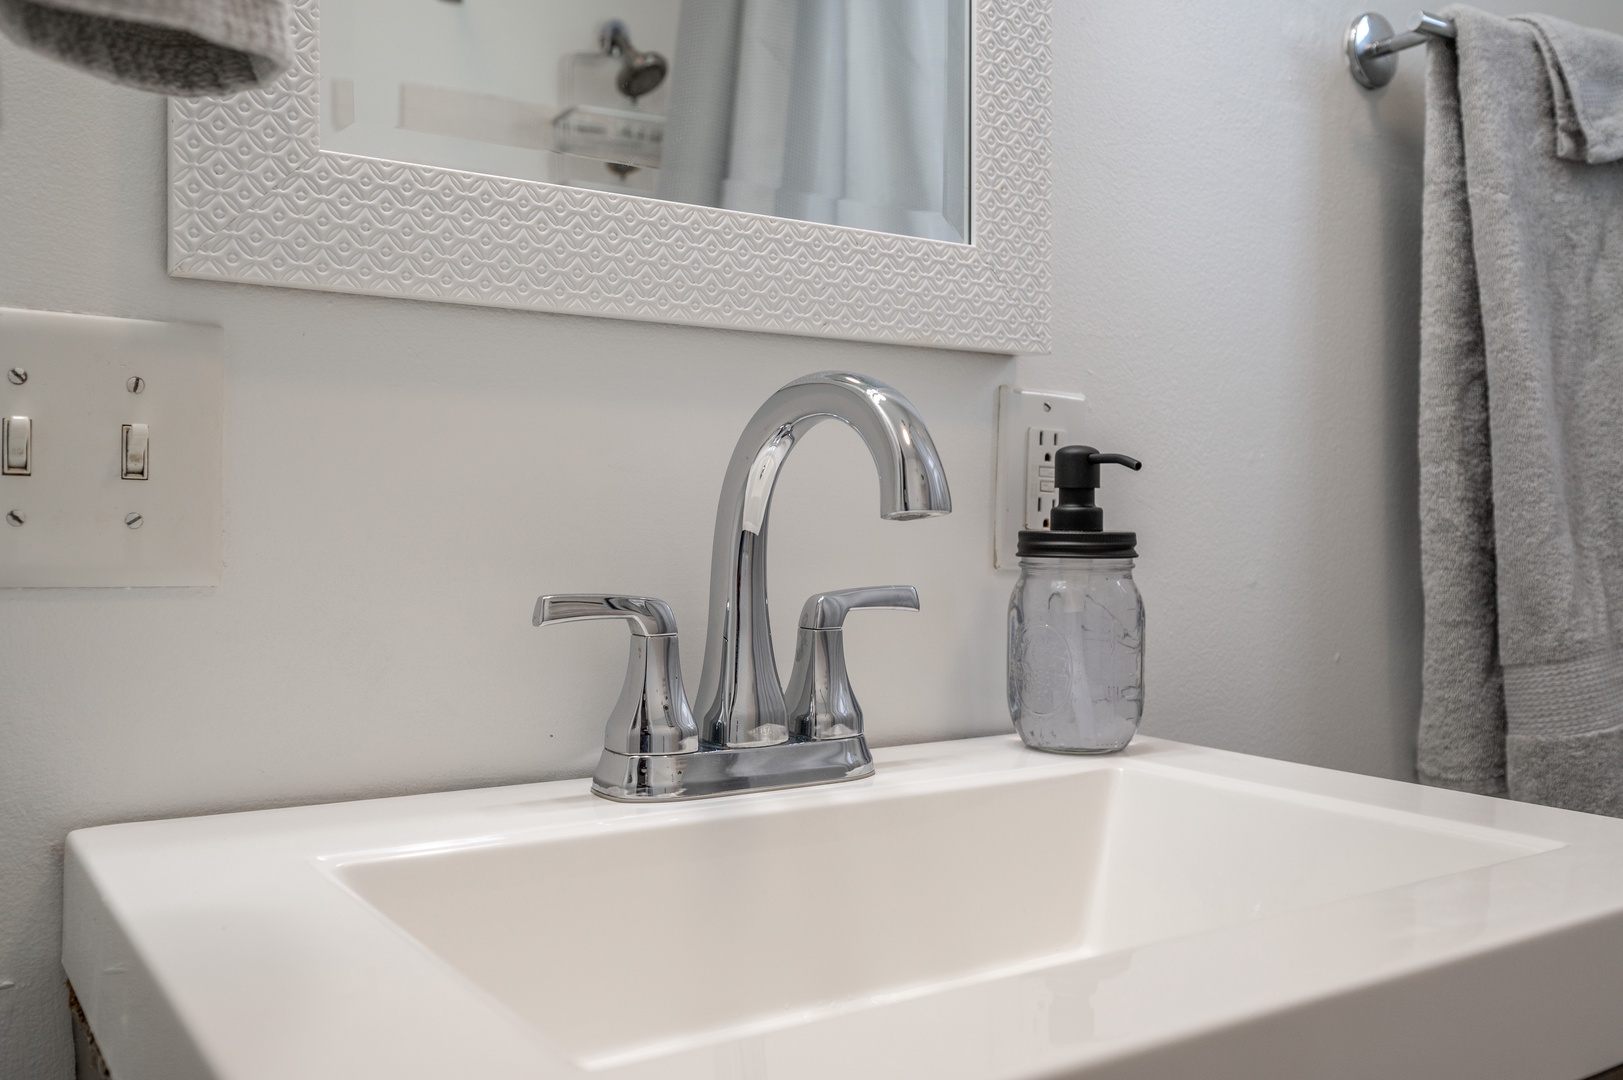 Unit 2 – The main-level full bath offers a single vanity & shower/tub combo